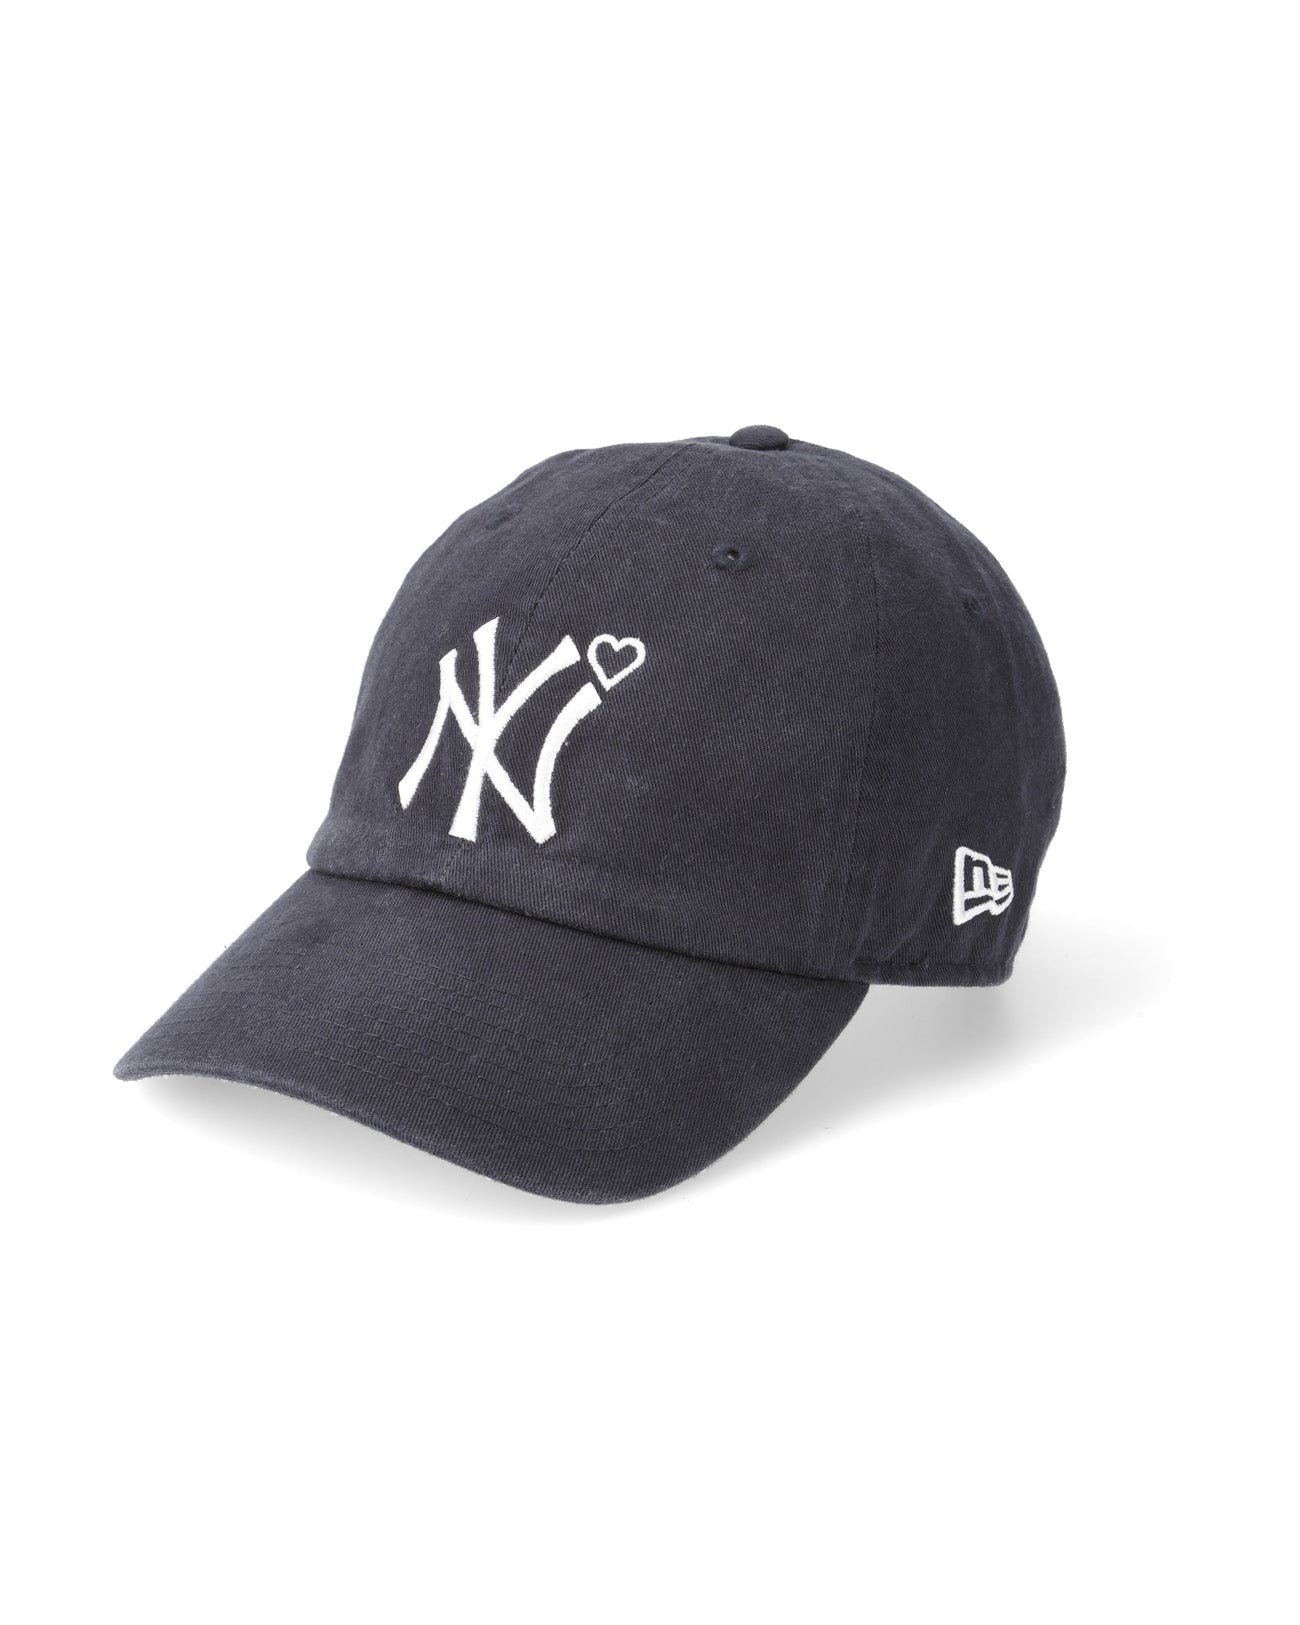 NEW得価basicks YANKEES HEART EMBROIDERY CAP 帽子